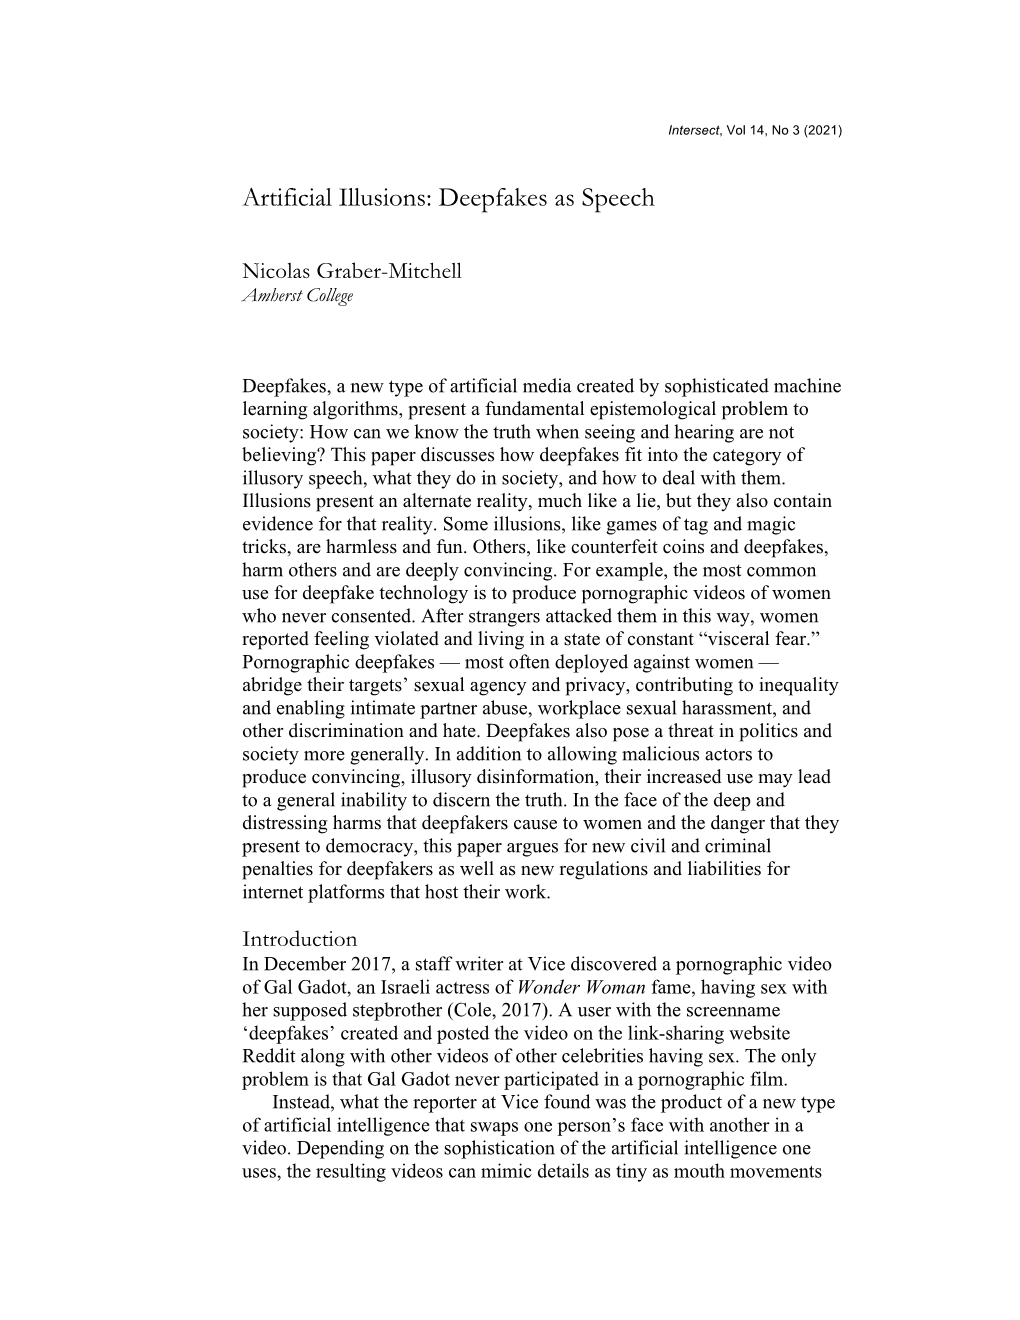 Artificial Illusions: Deepfakes As Speech